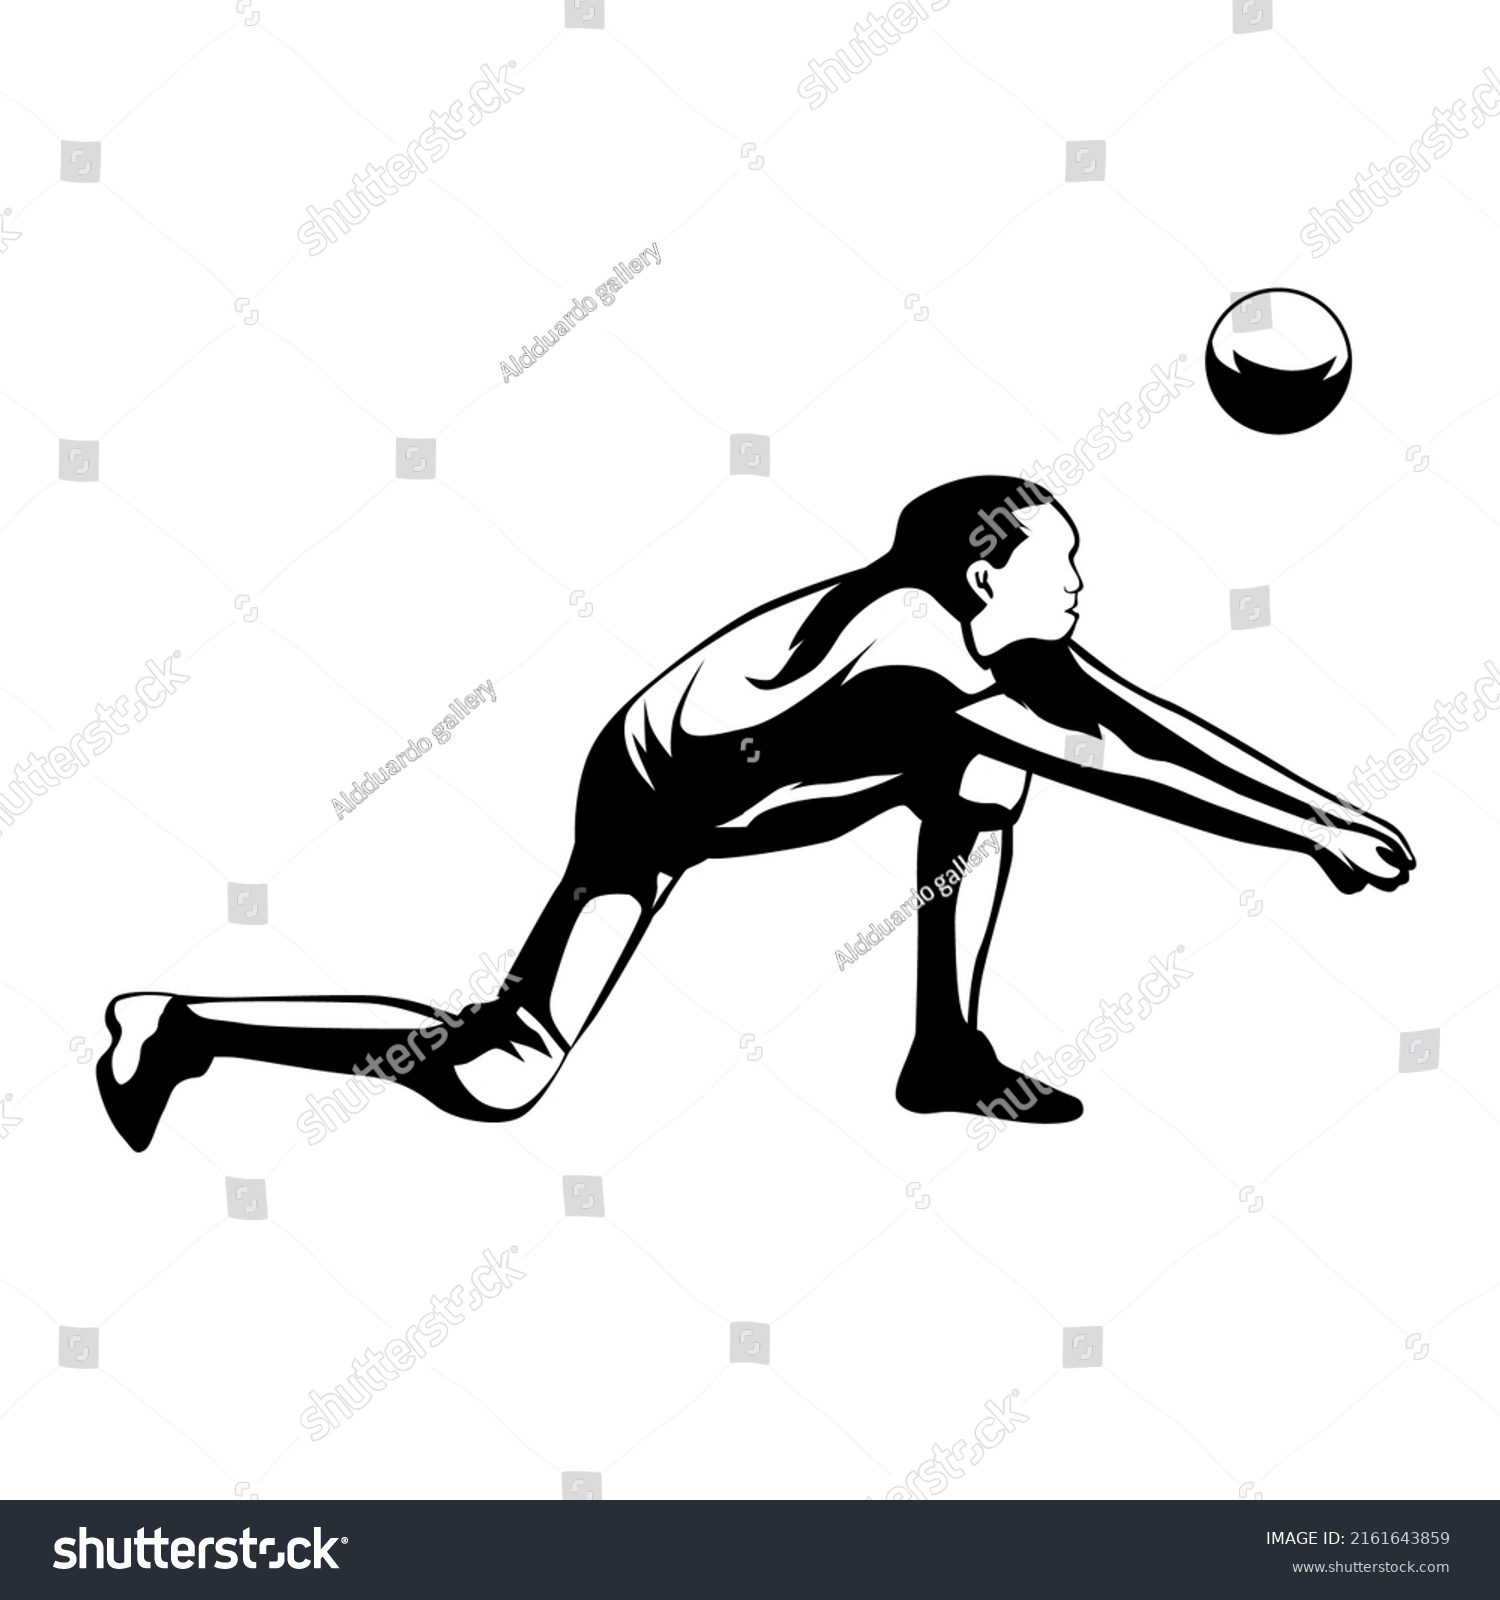 Silhouette Illustration Volleyball Athlete Hitting Ball Stock ...